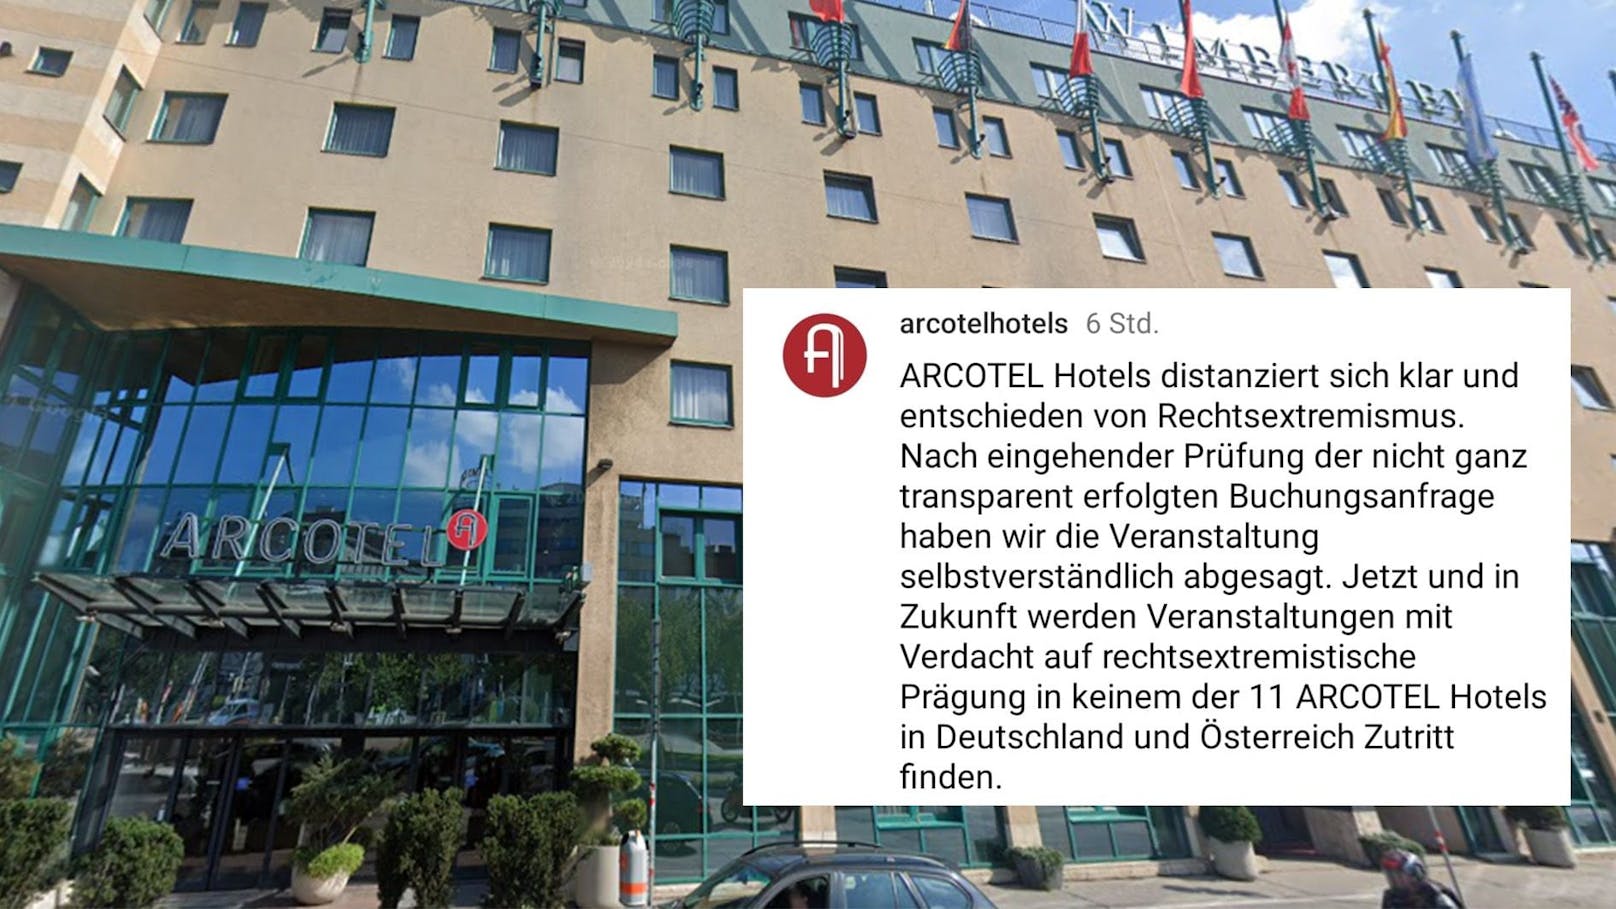 Wiener Hotel sagt FPÖ-naher Burschenschaft ab